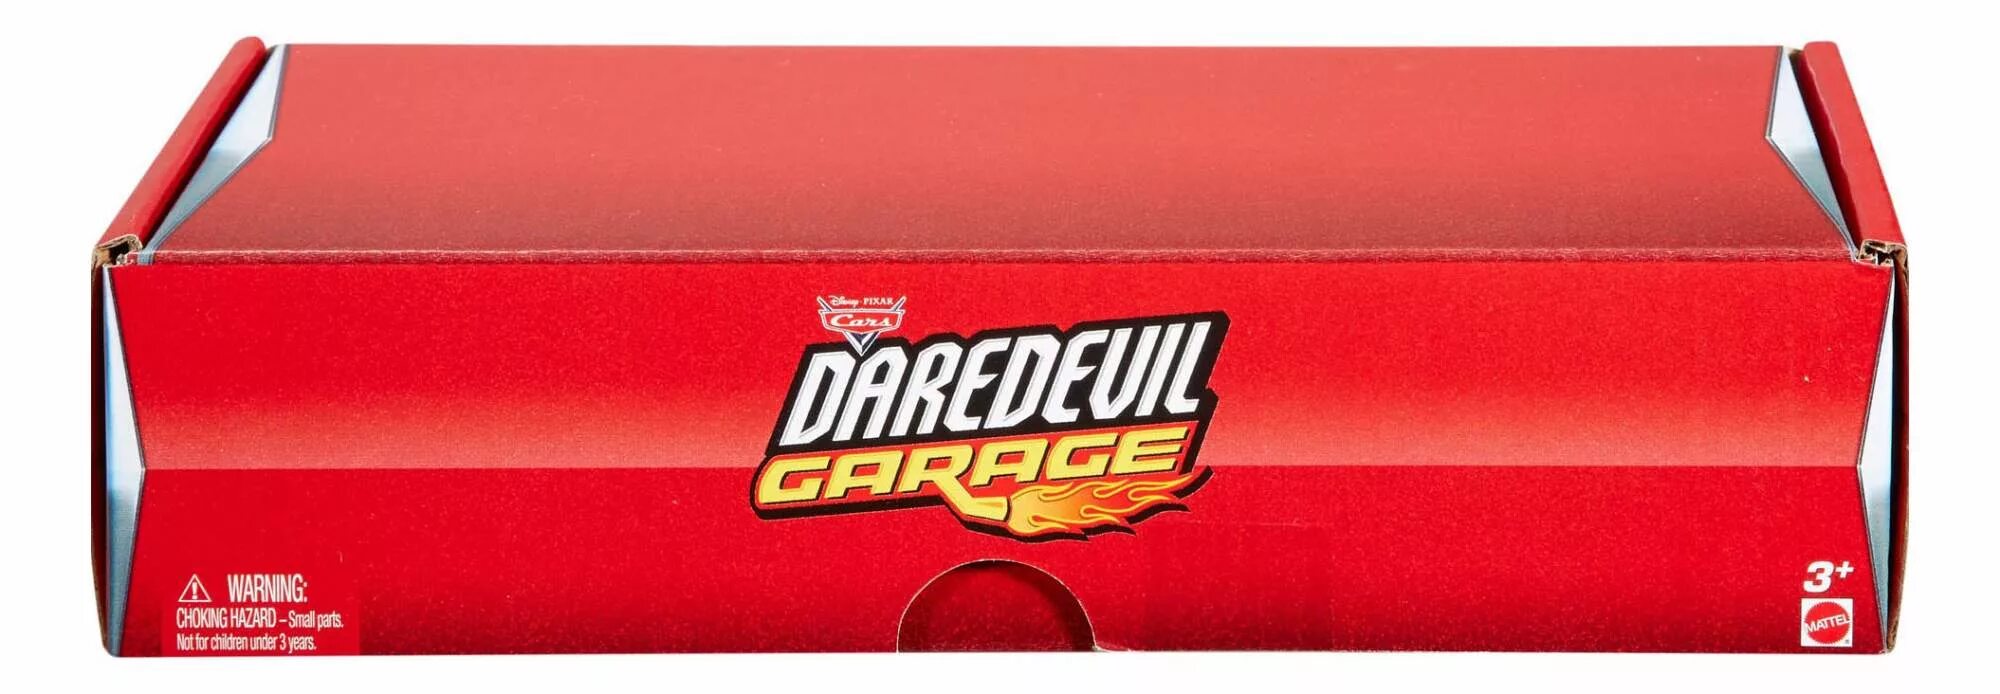 Cars daredevil garage. Mattel drg71 игровой набор Daredevil Garage, Тачки. Cars Daredevil Garage drg71. Cars Daredevil Garage MCQUEEN. Cars Daredevil Garage Mattel редкие.